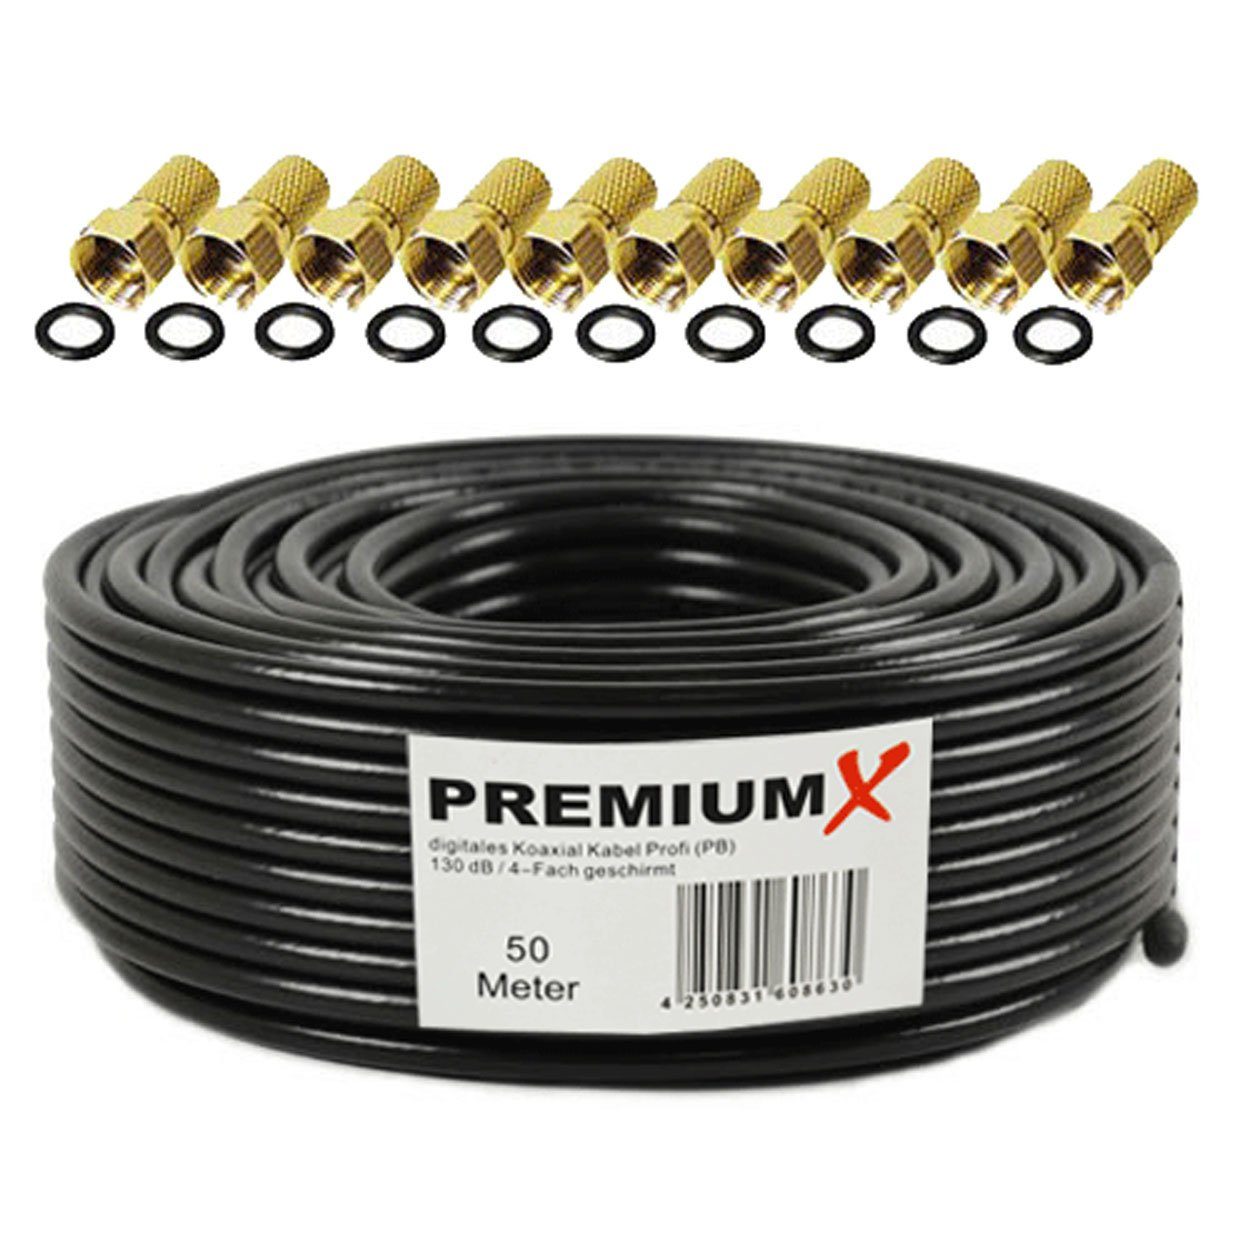 PremiumX 50m PROFI Koaxialkabel F-Stecker SAT-Kabel Schwarz 10x 4-fach KUPFER 130dB